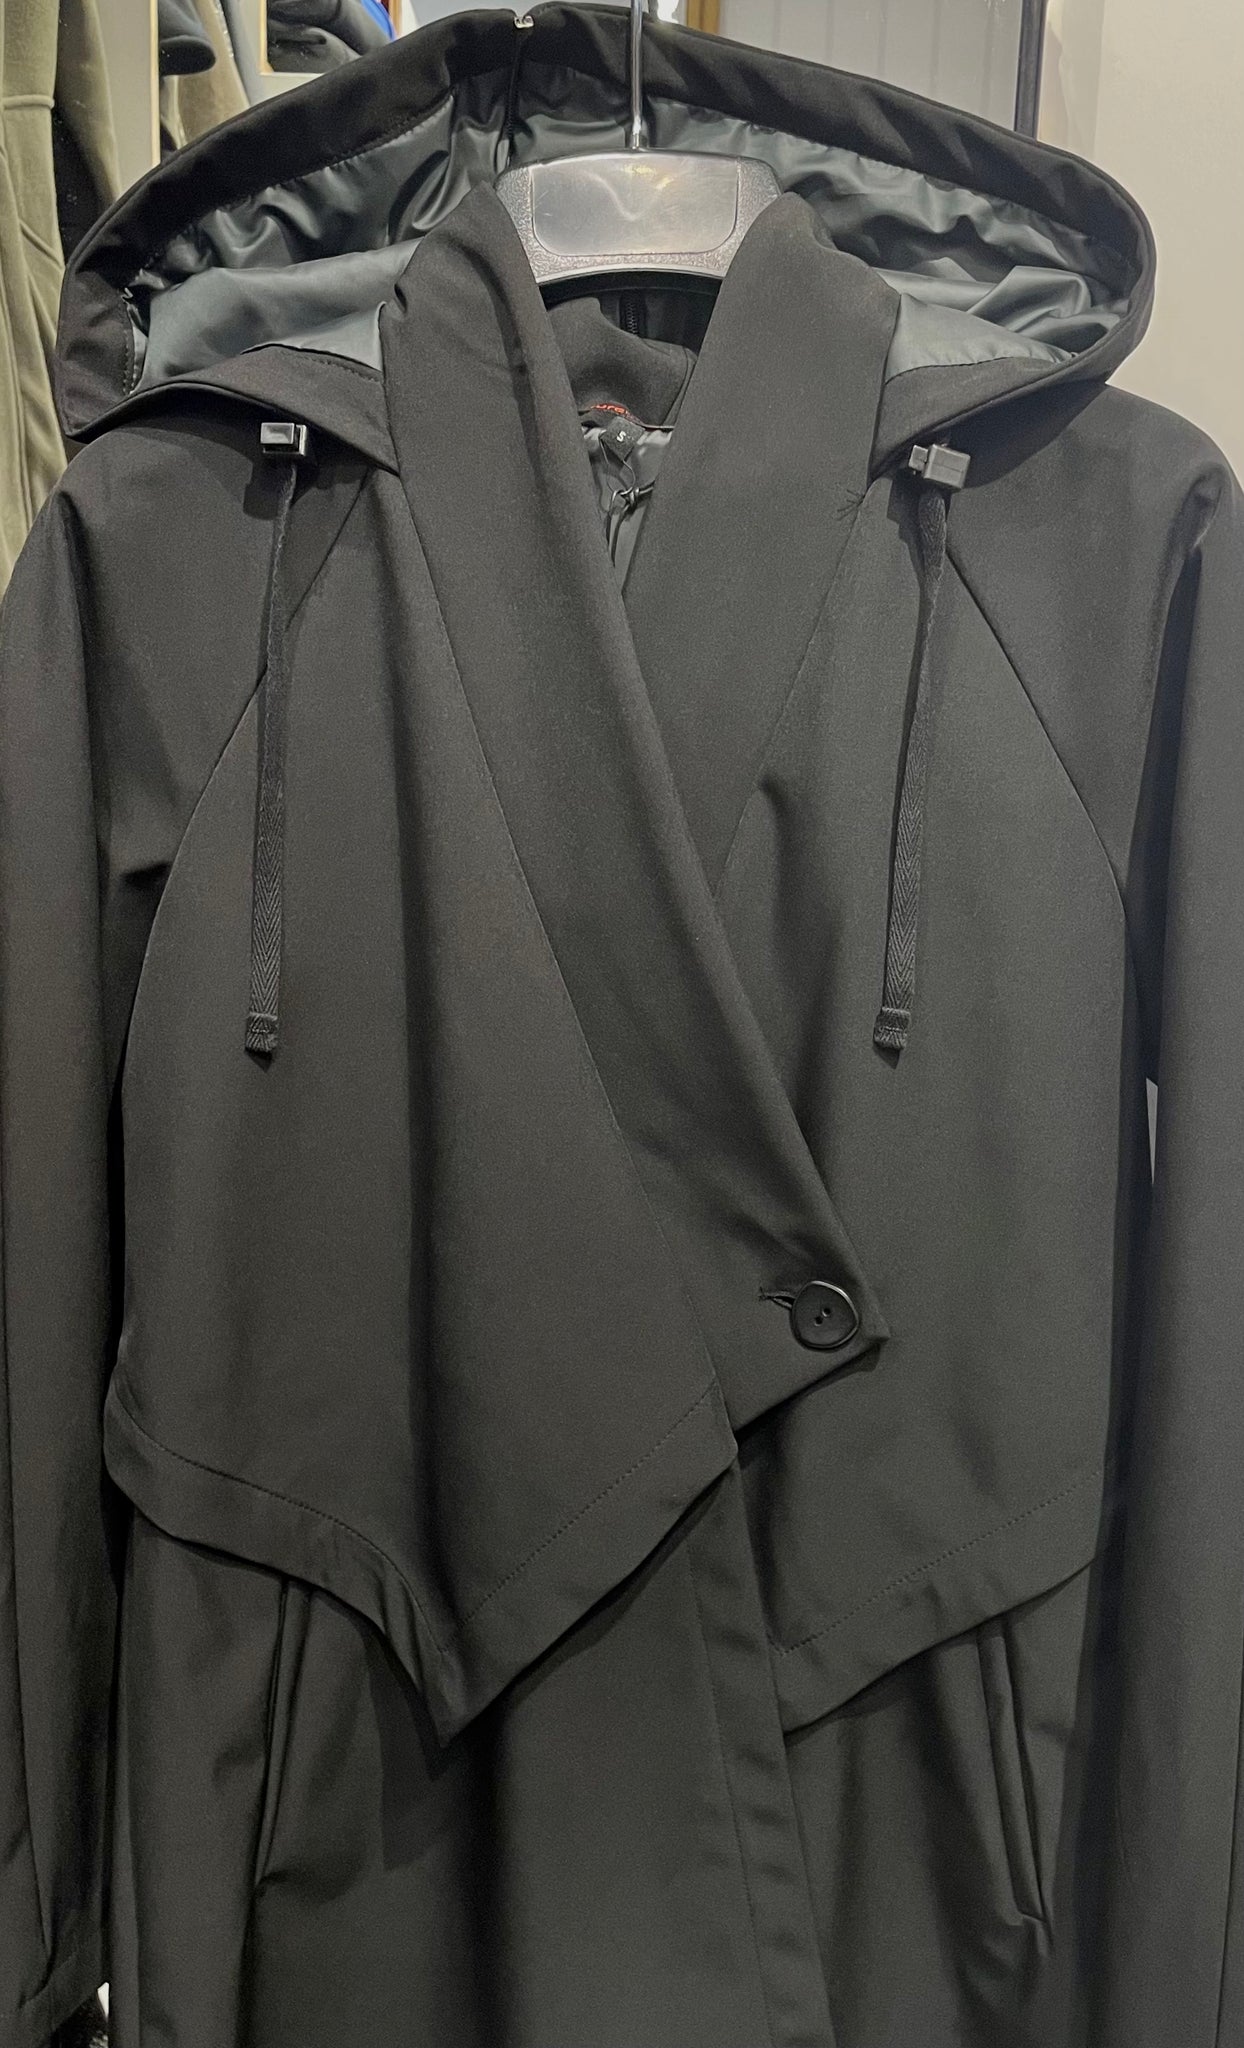 Convertible Hood Asymmetrical Rain Jacket w/ lining